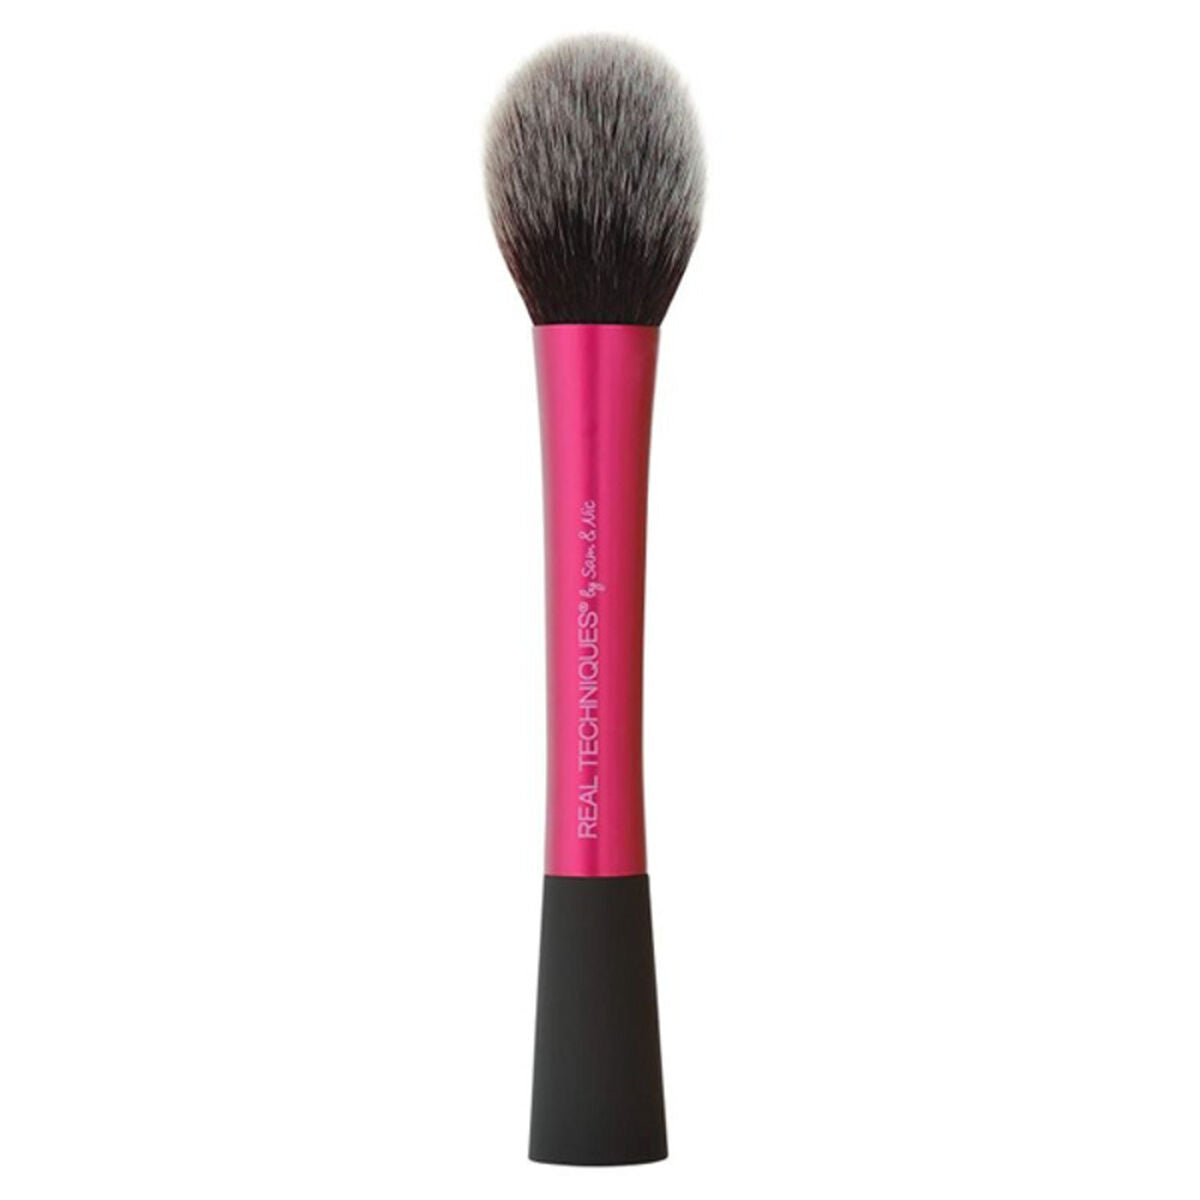 Make-up Brush Blush Real Techniques 1407-0